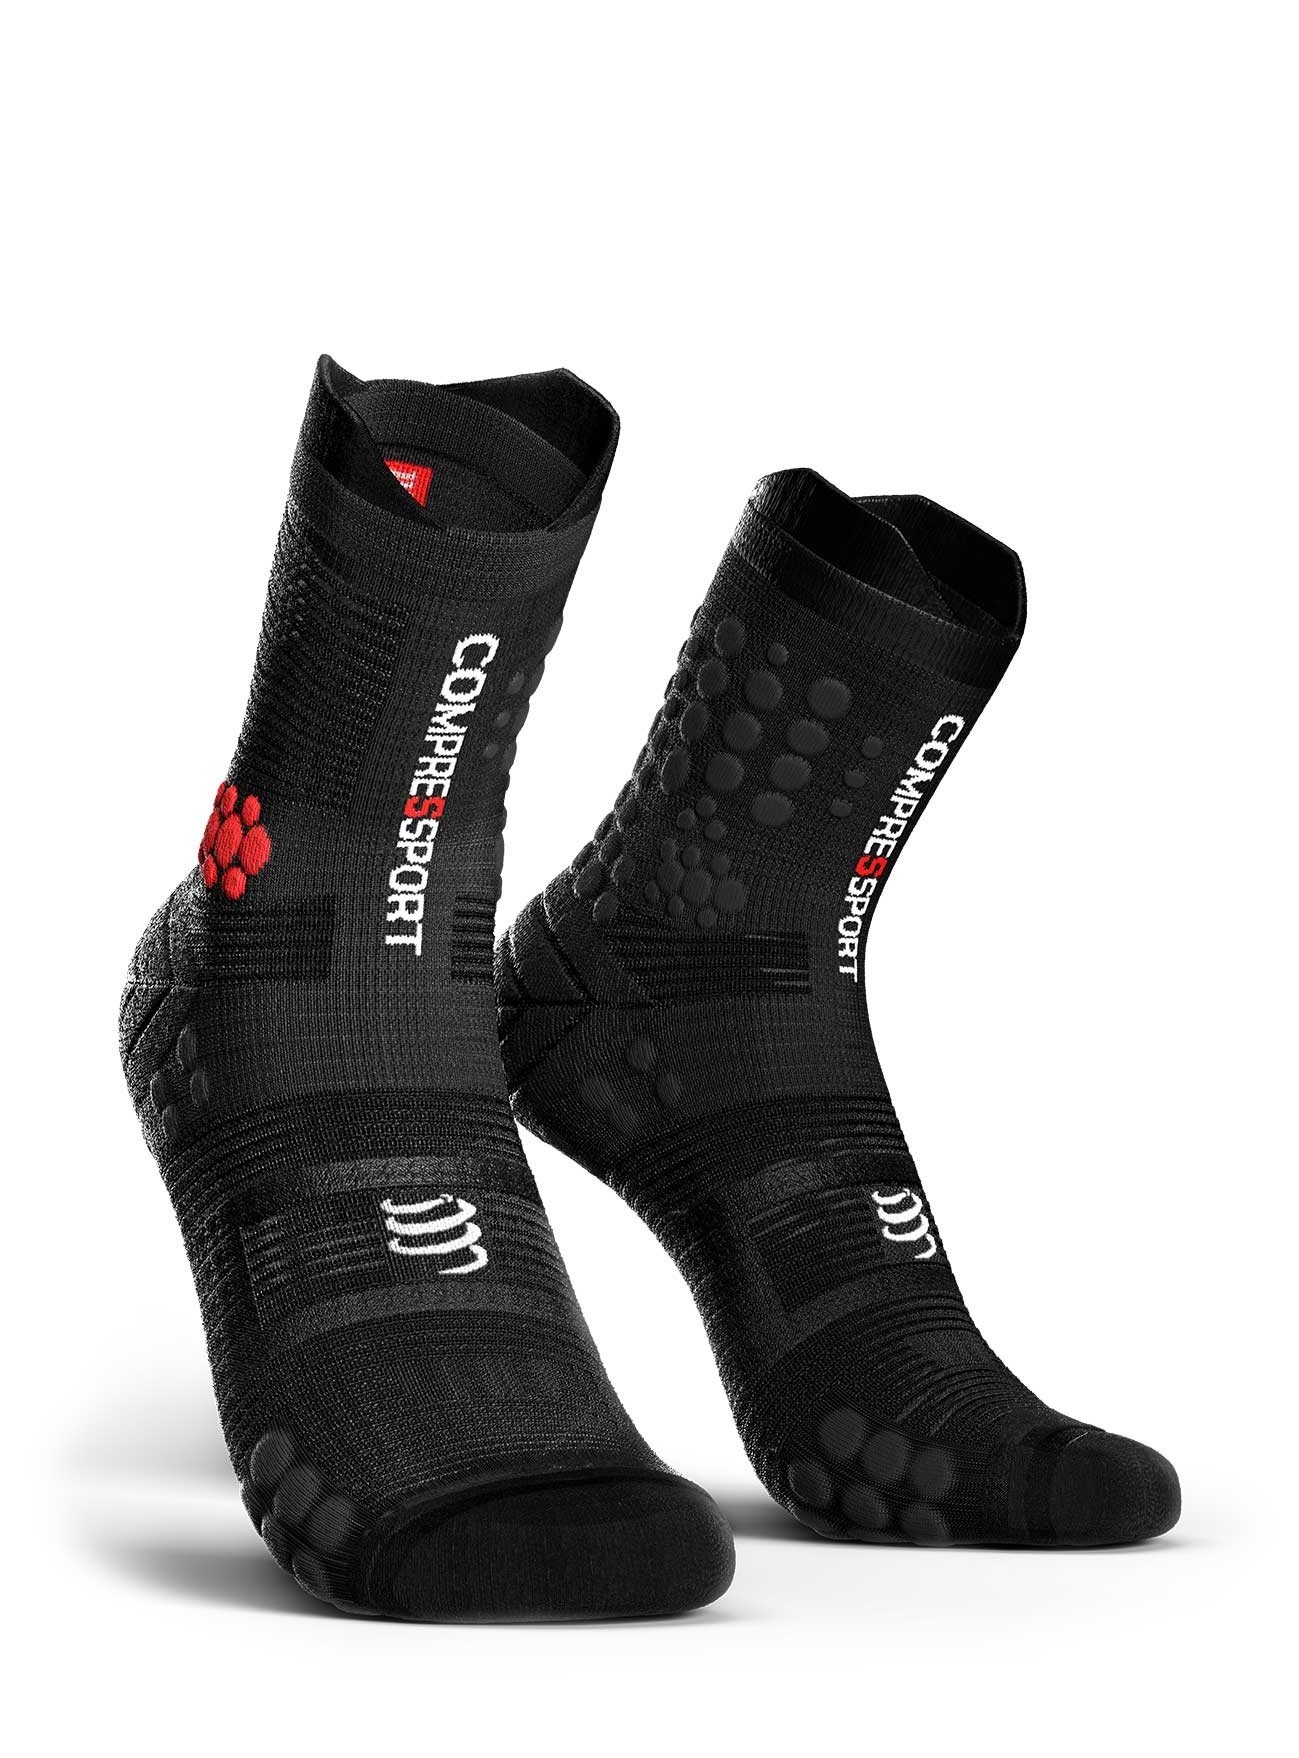 CompresSport - Pro Racing Socks V3.0 Trail - Clothing-Accessories-Socks ...